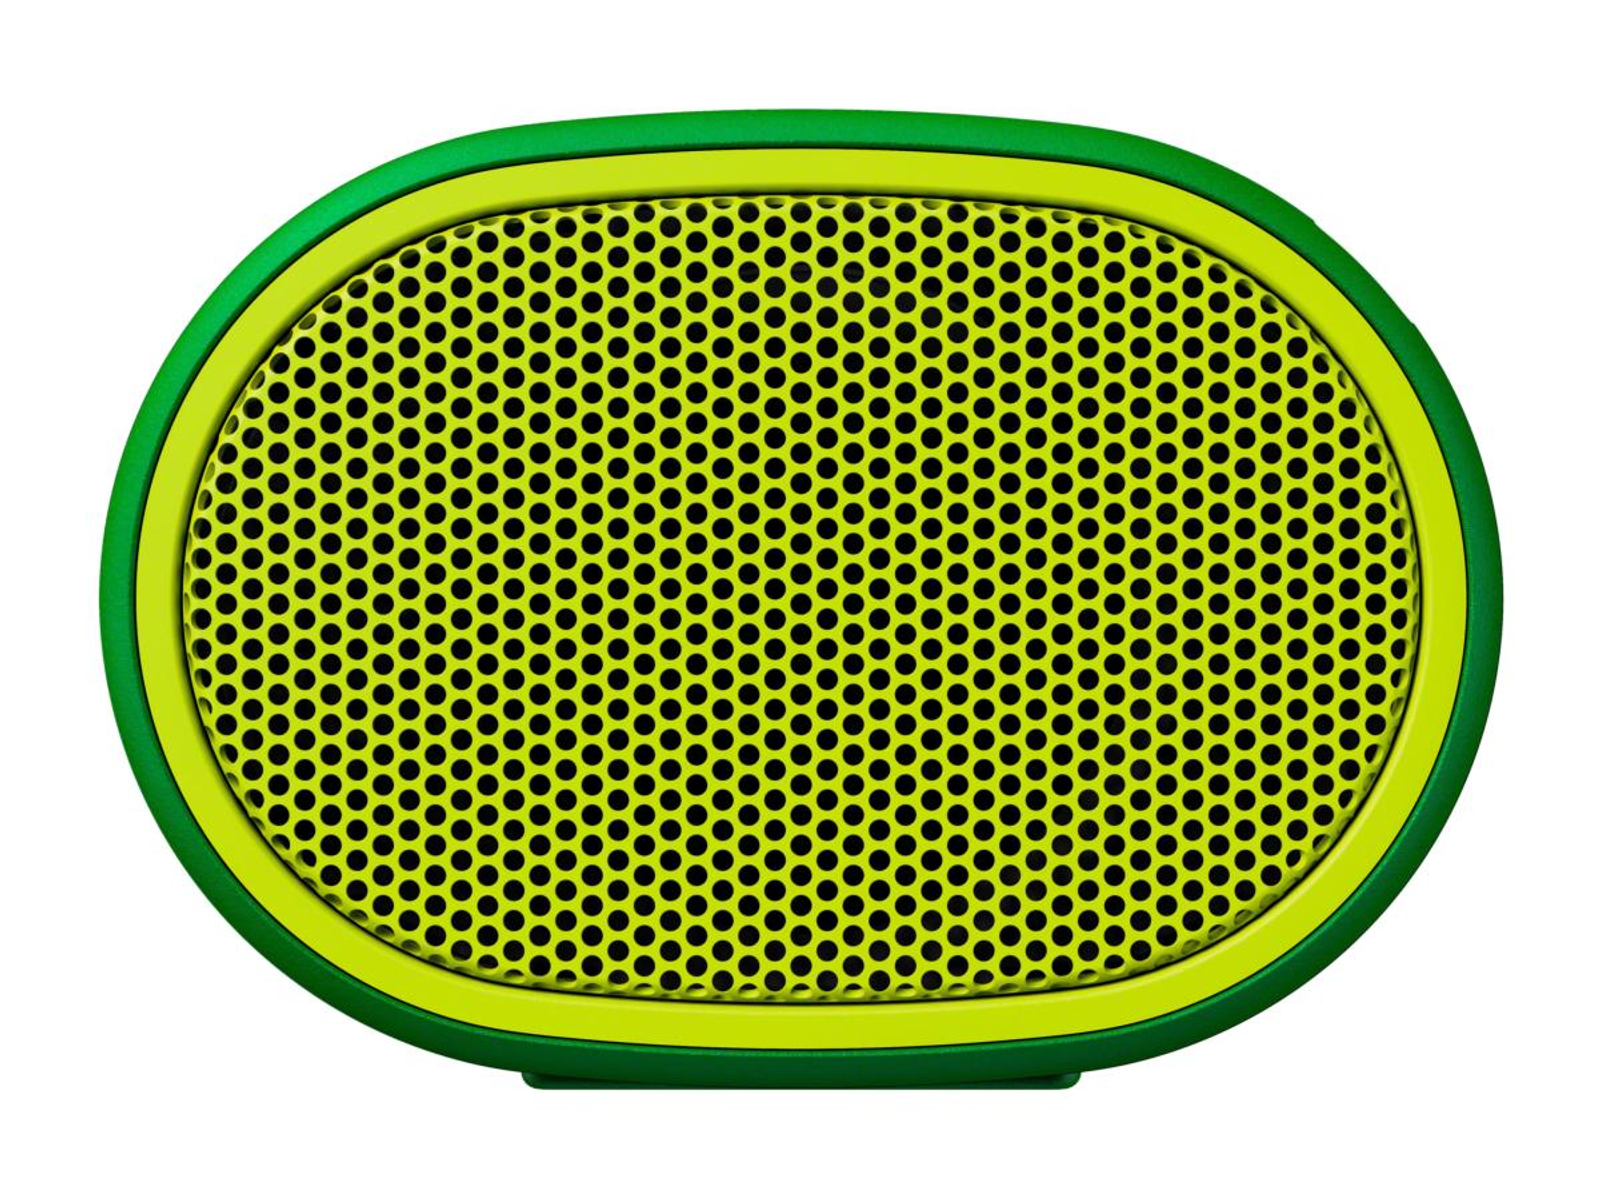 SONY SRS-XB 01 G Bluetooth Wasserfest Lautsprecher, Grün